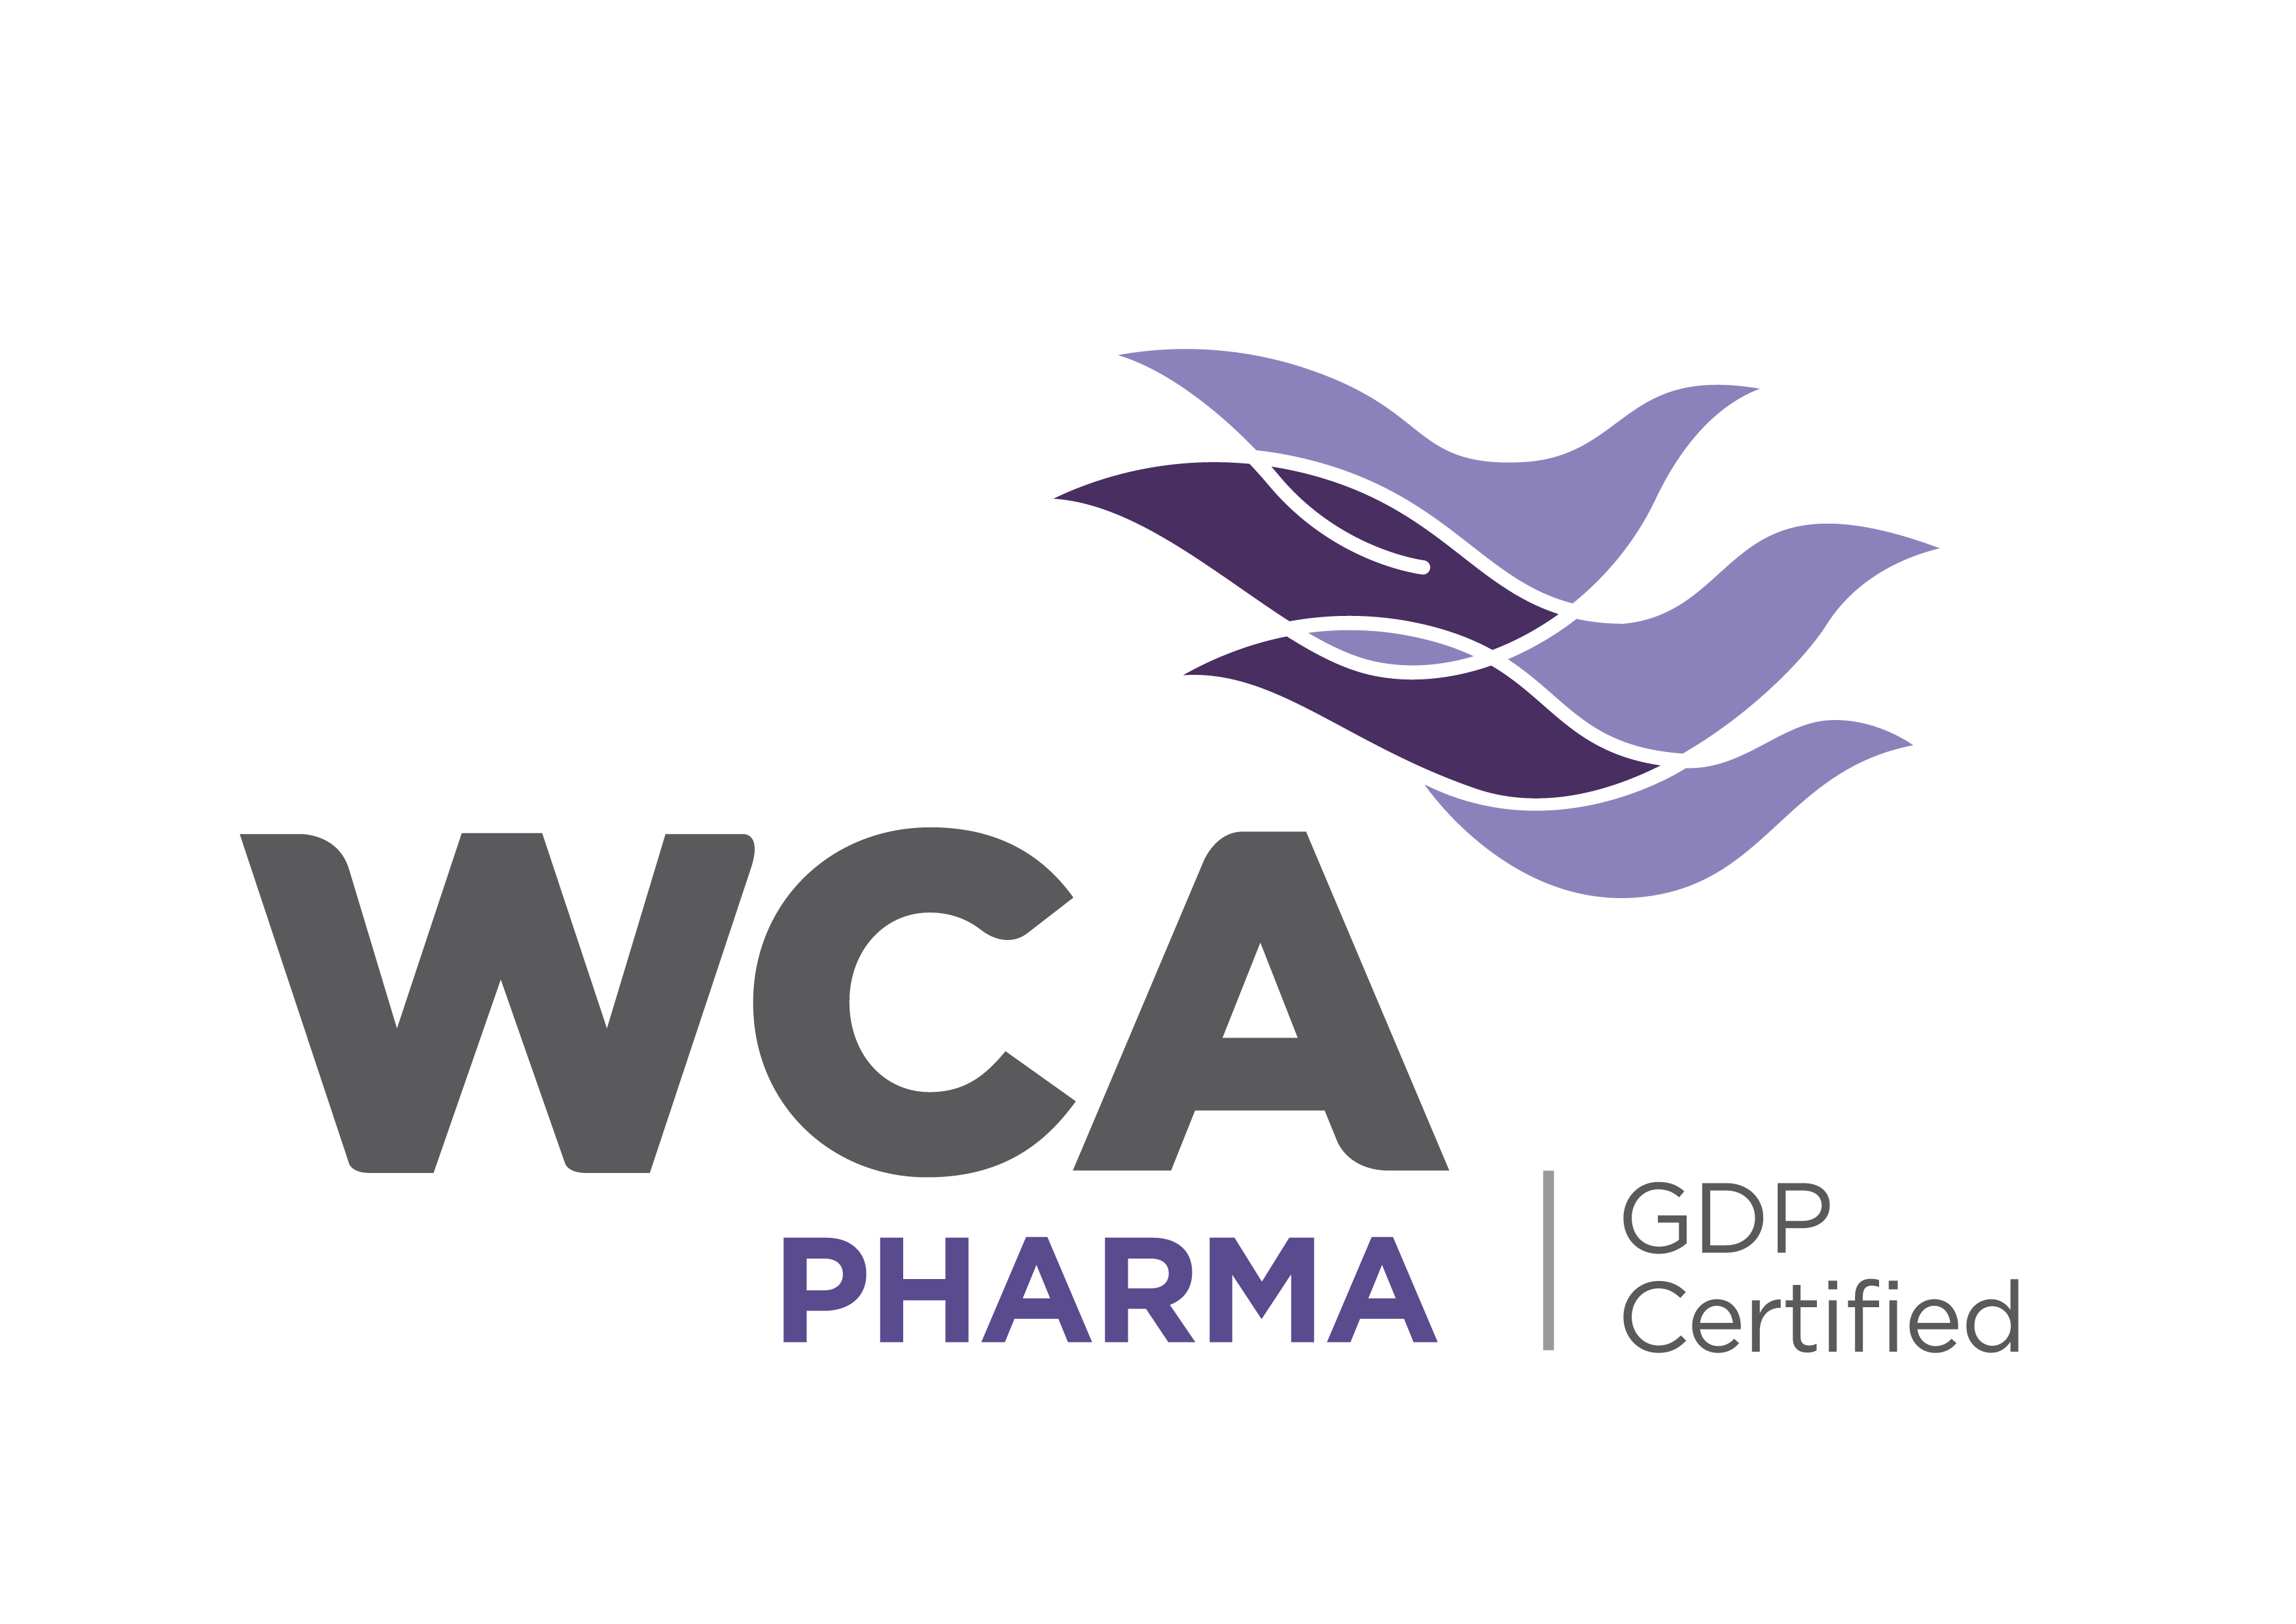 WCA PHARMA GDP Certified